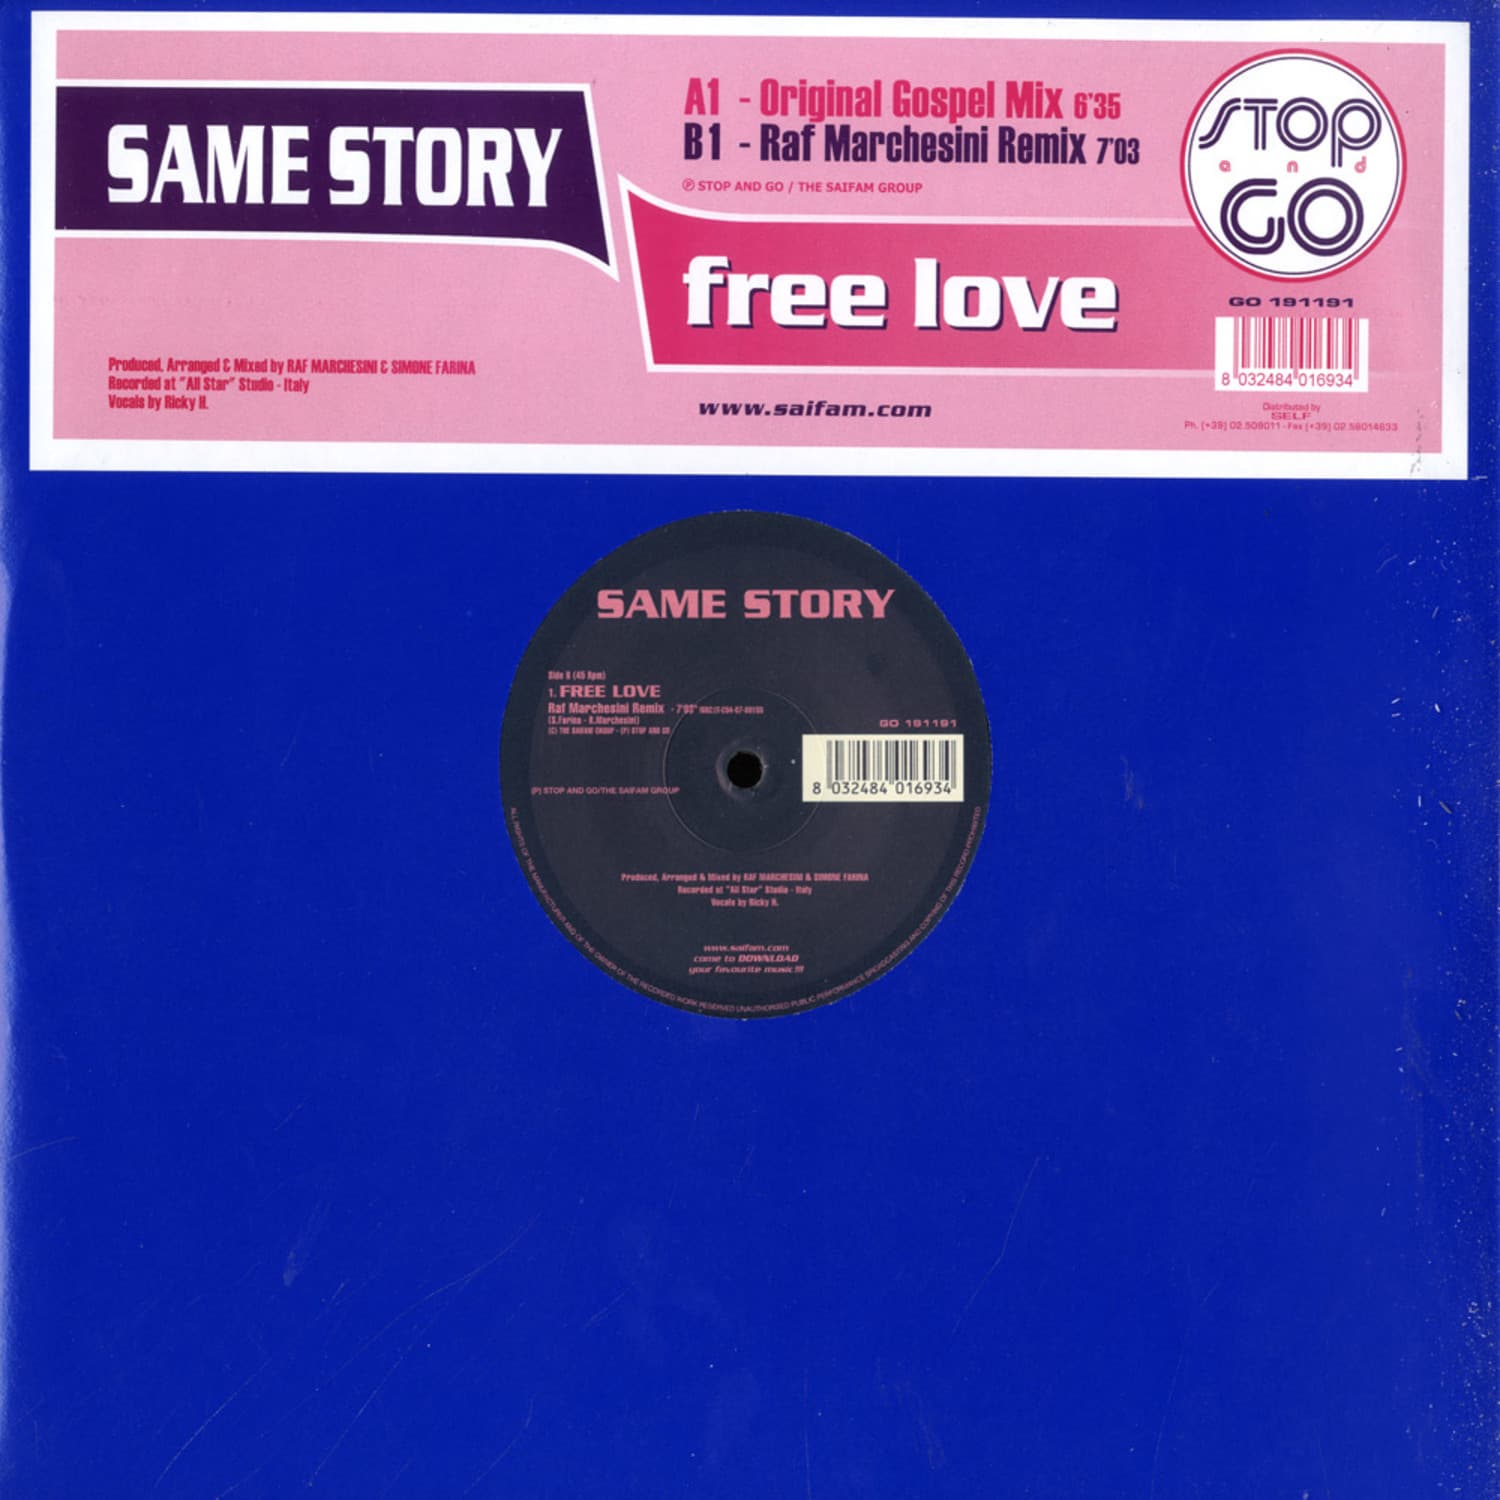 Same Story - FREE LOVE